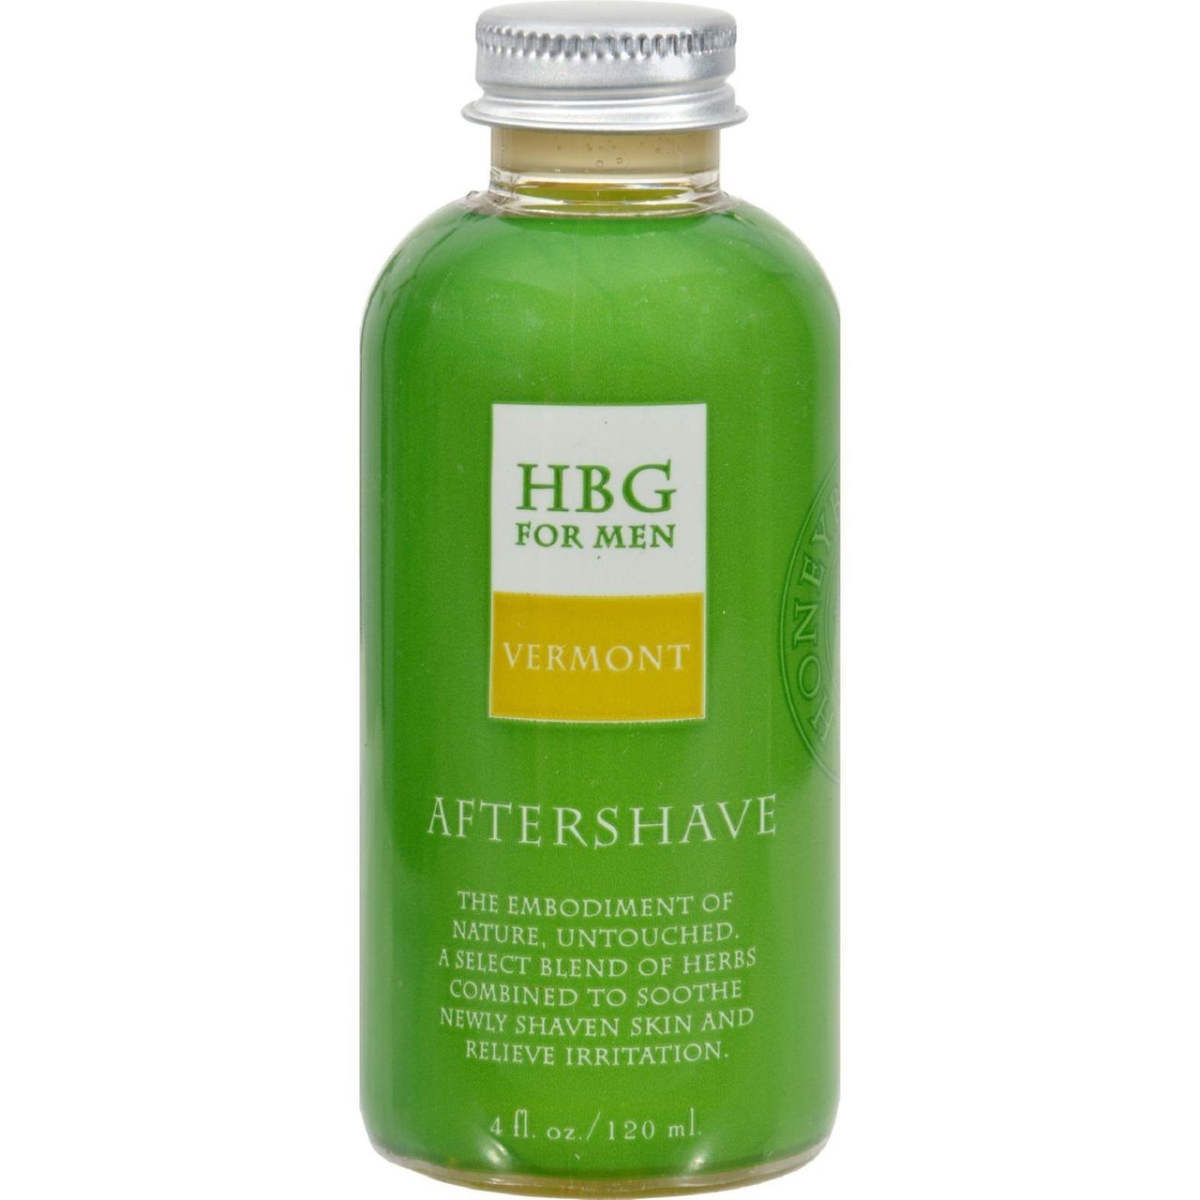 Hg0418376 4 Fl Oz Aftershave - Herbal Vermont